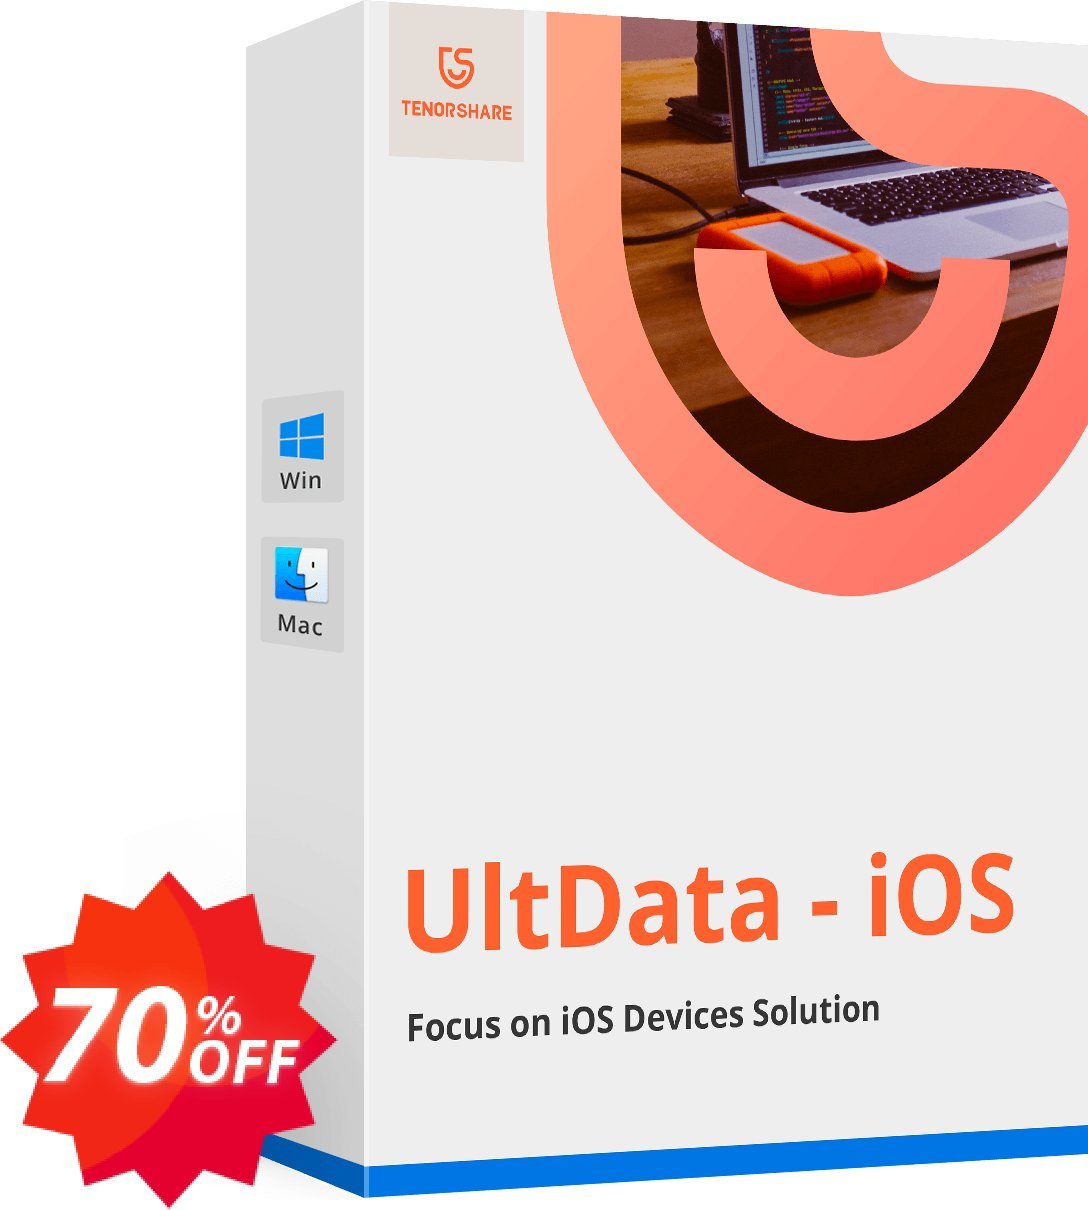 Tenorshare UltData for MAC Coupon code 70% discount 